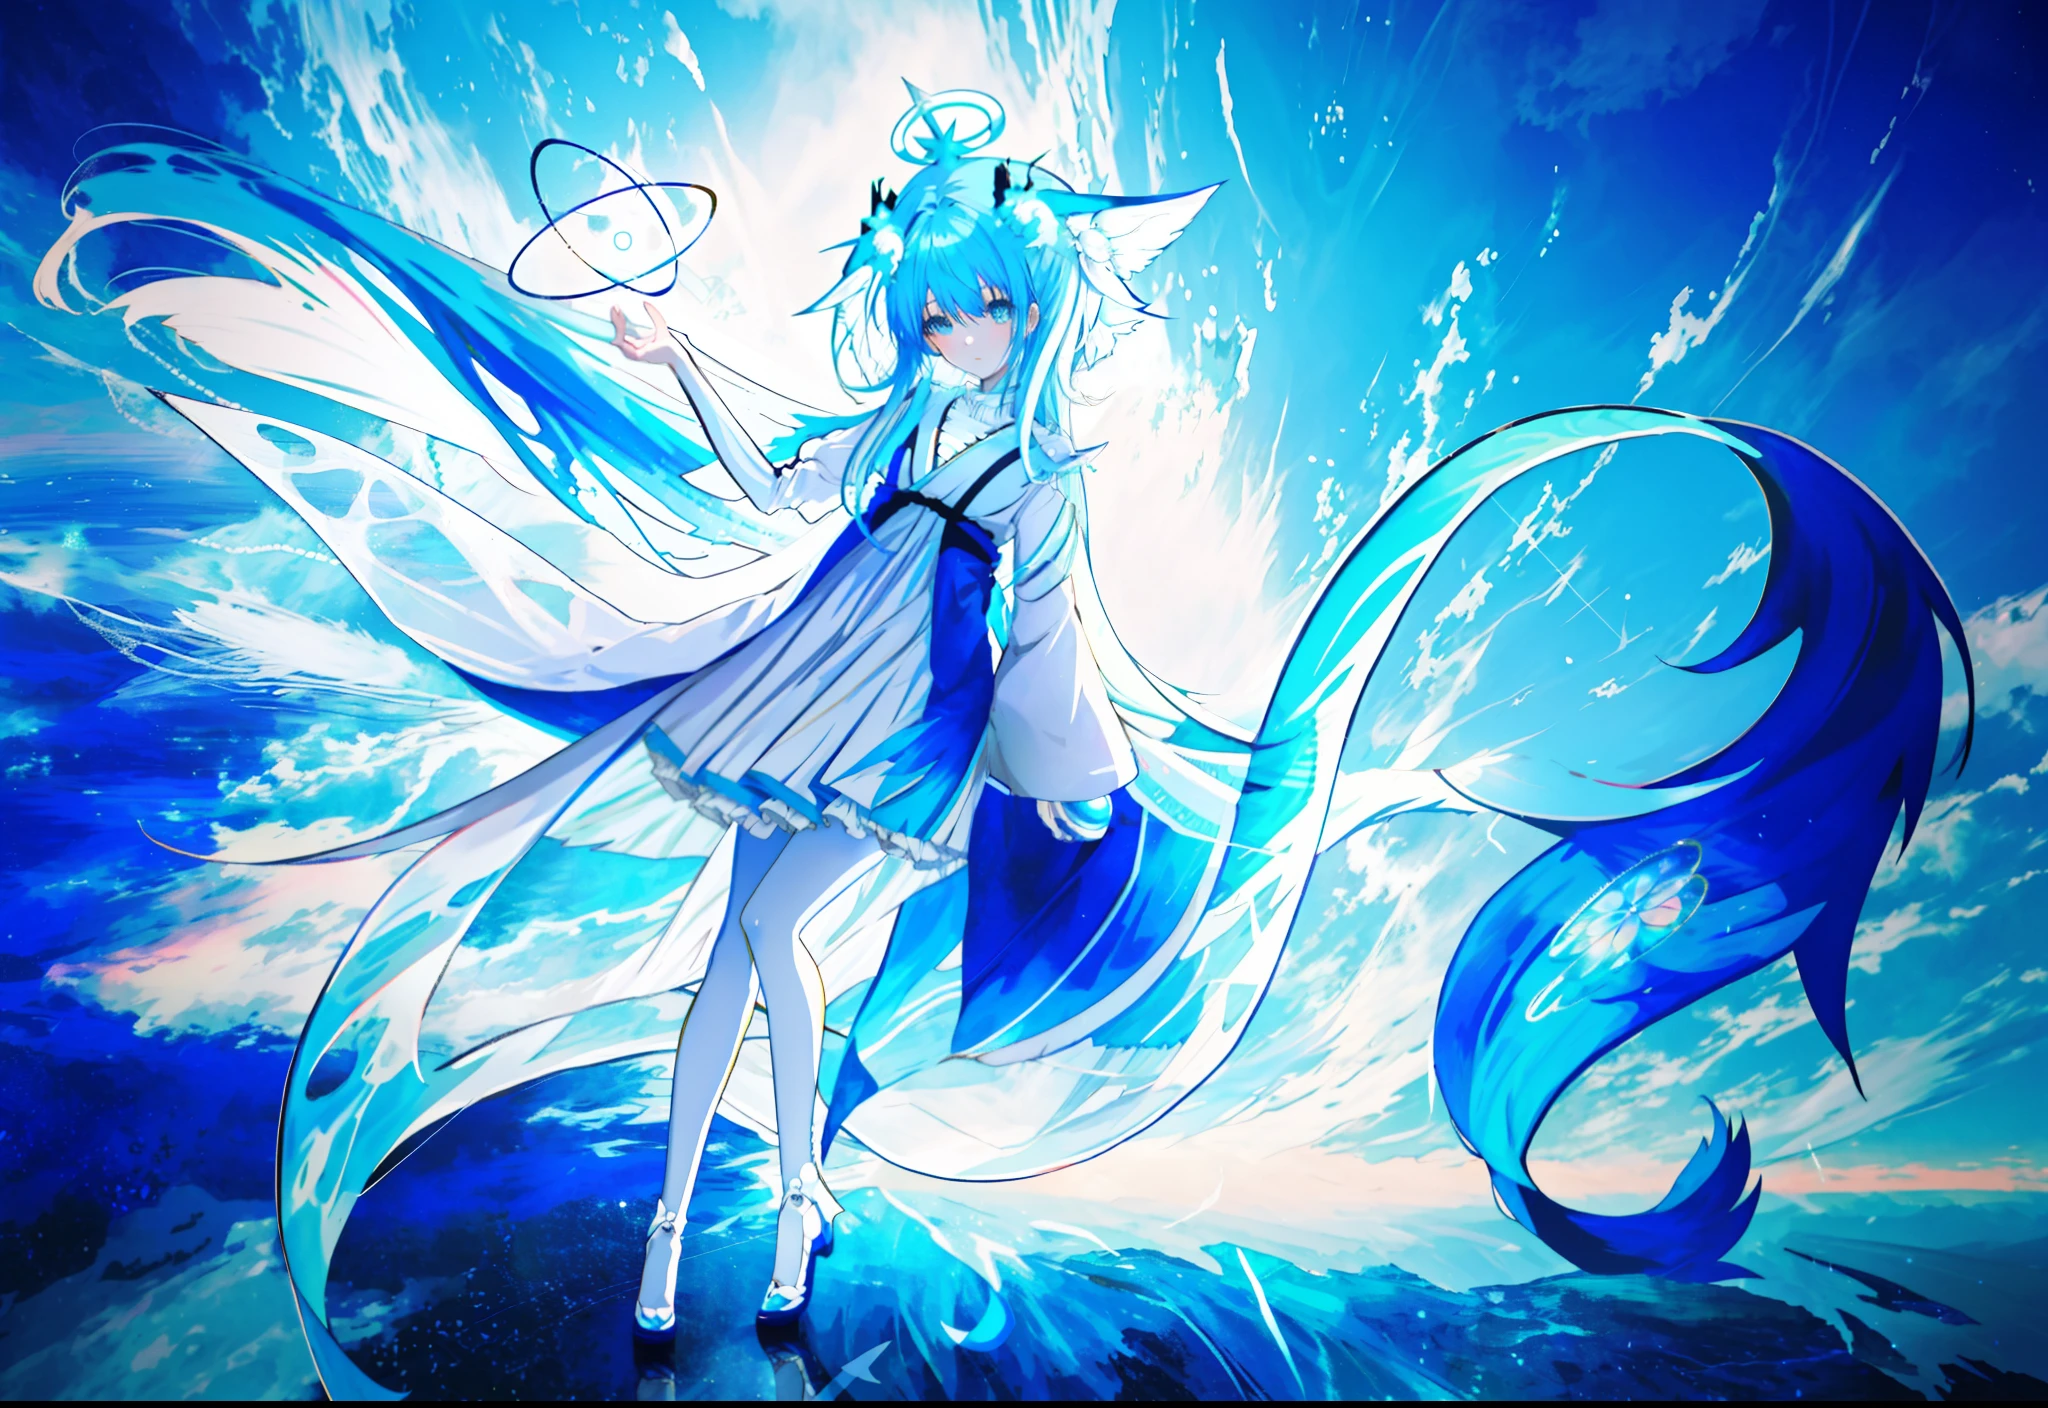 Anime girl with blue hair and white dress, full body adoptable, long haired humanoid fursona, rimuru tempest, White-haired god, sky witch, anime girl with cosmic hair, Anime monster girl, astral fairy,  astral ethereal, Anime goddess, shirabii, furaffinity fursona, celestial aura